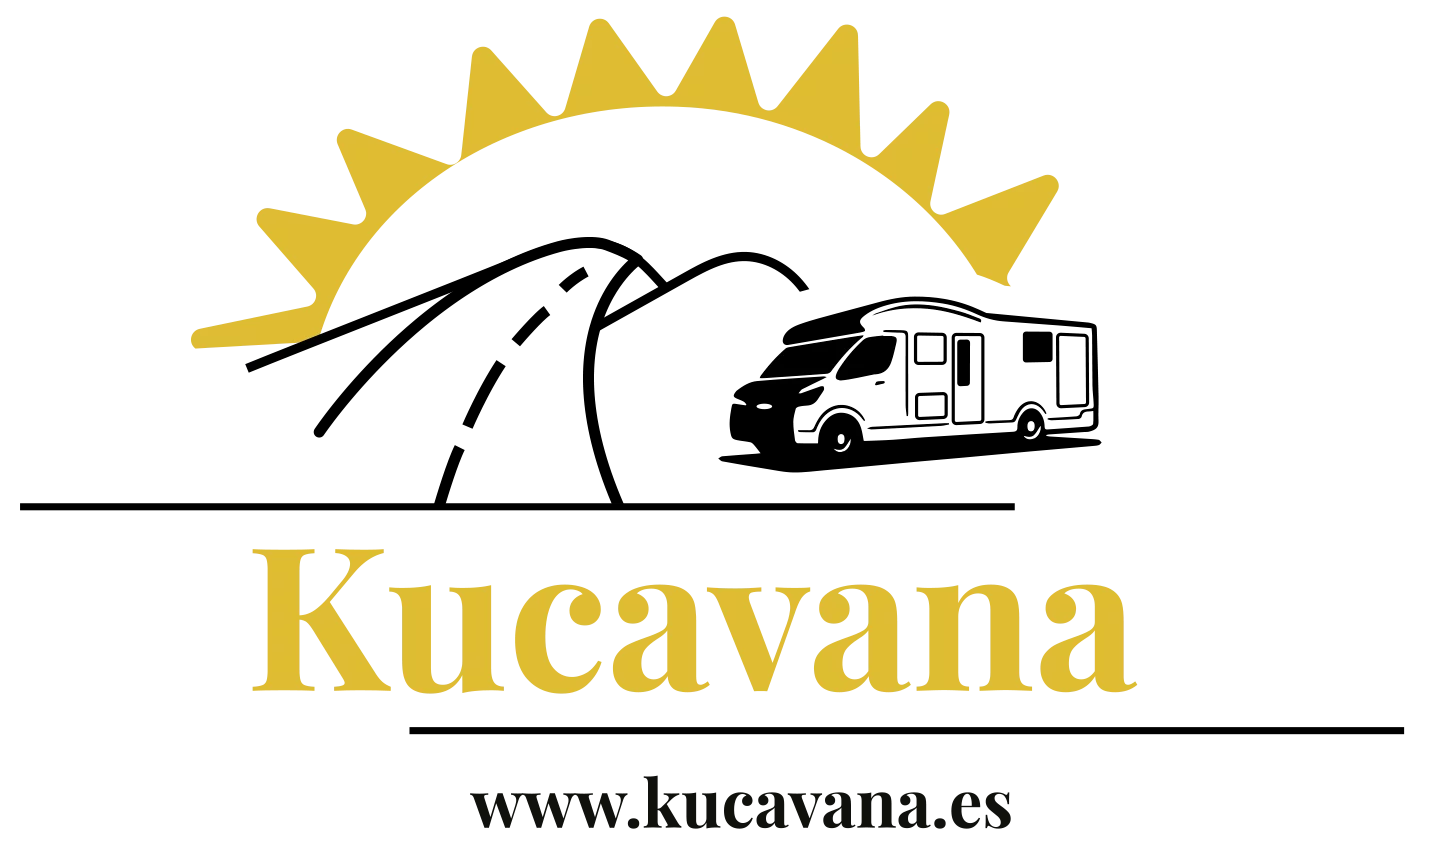 Kucavana- Travel by motorhome